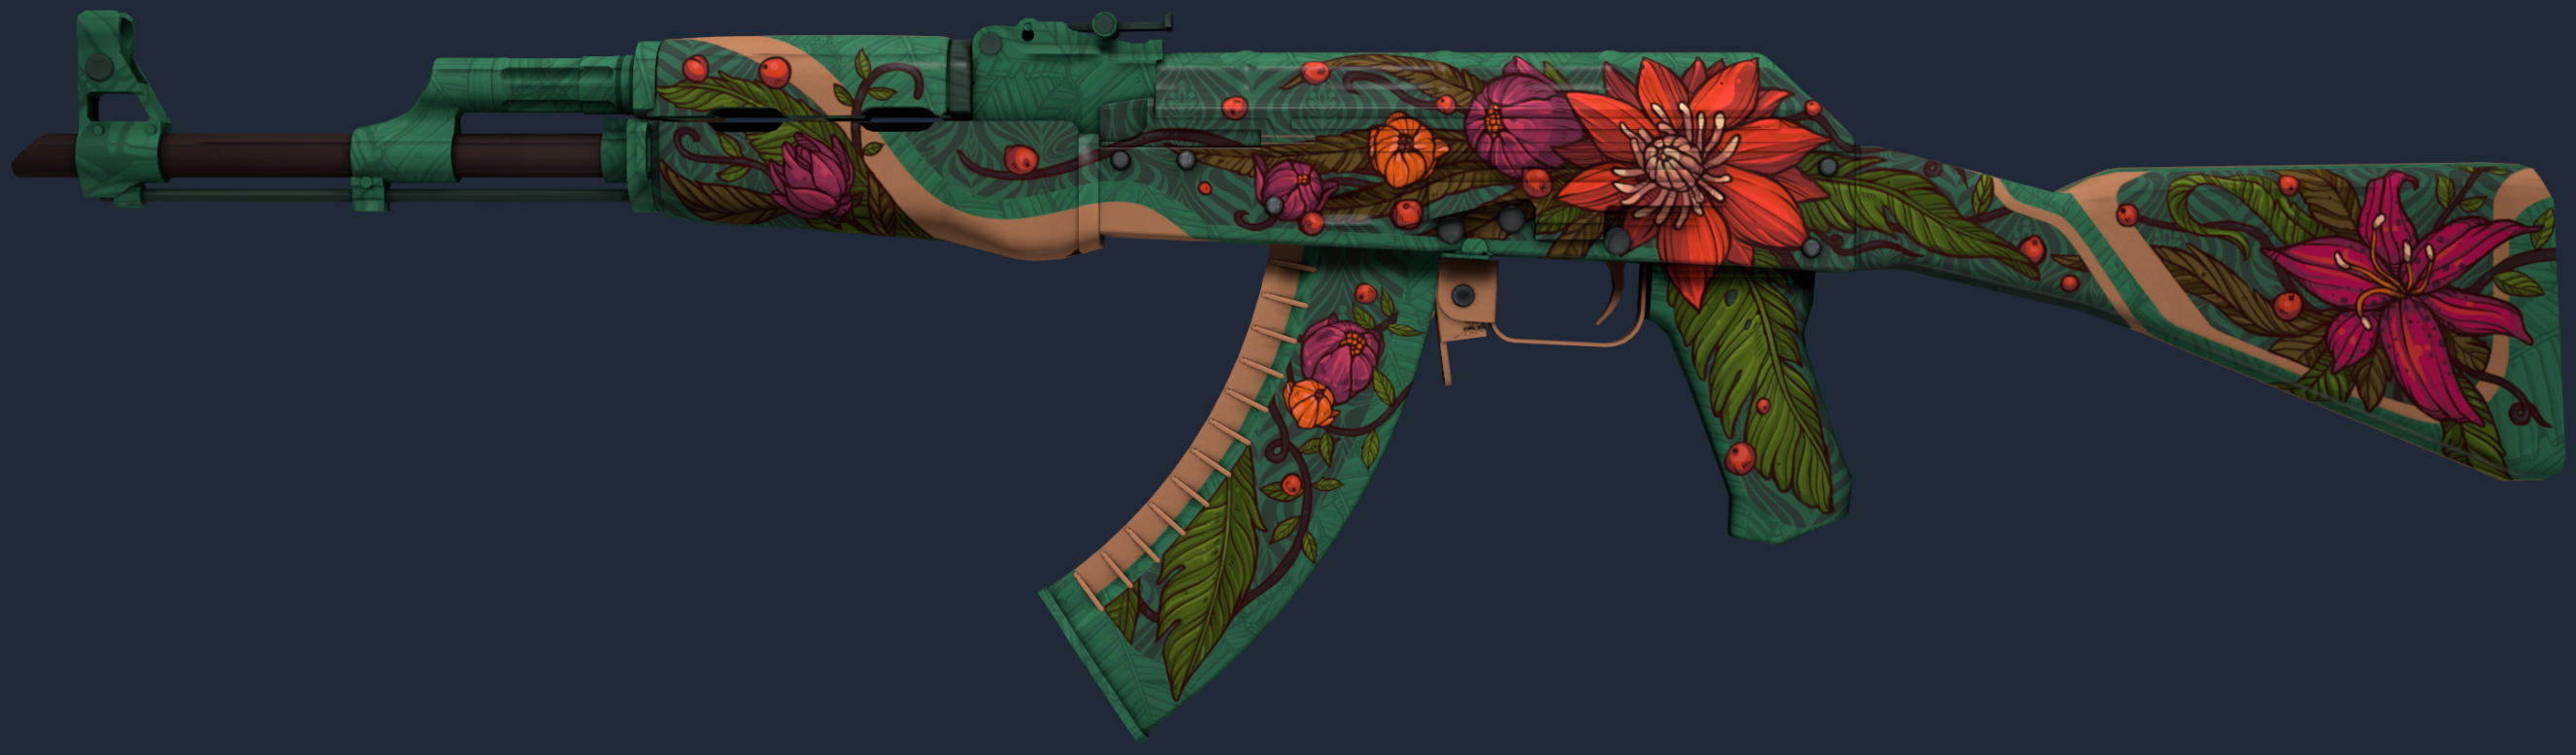 AK-47 | Lotus sălbatic